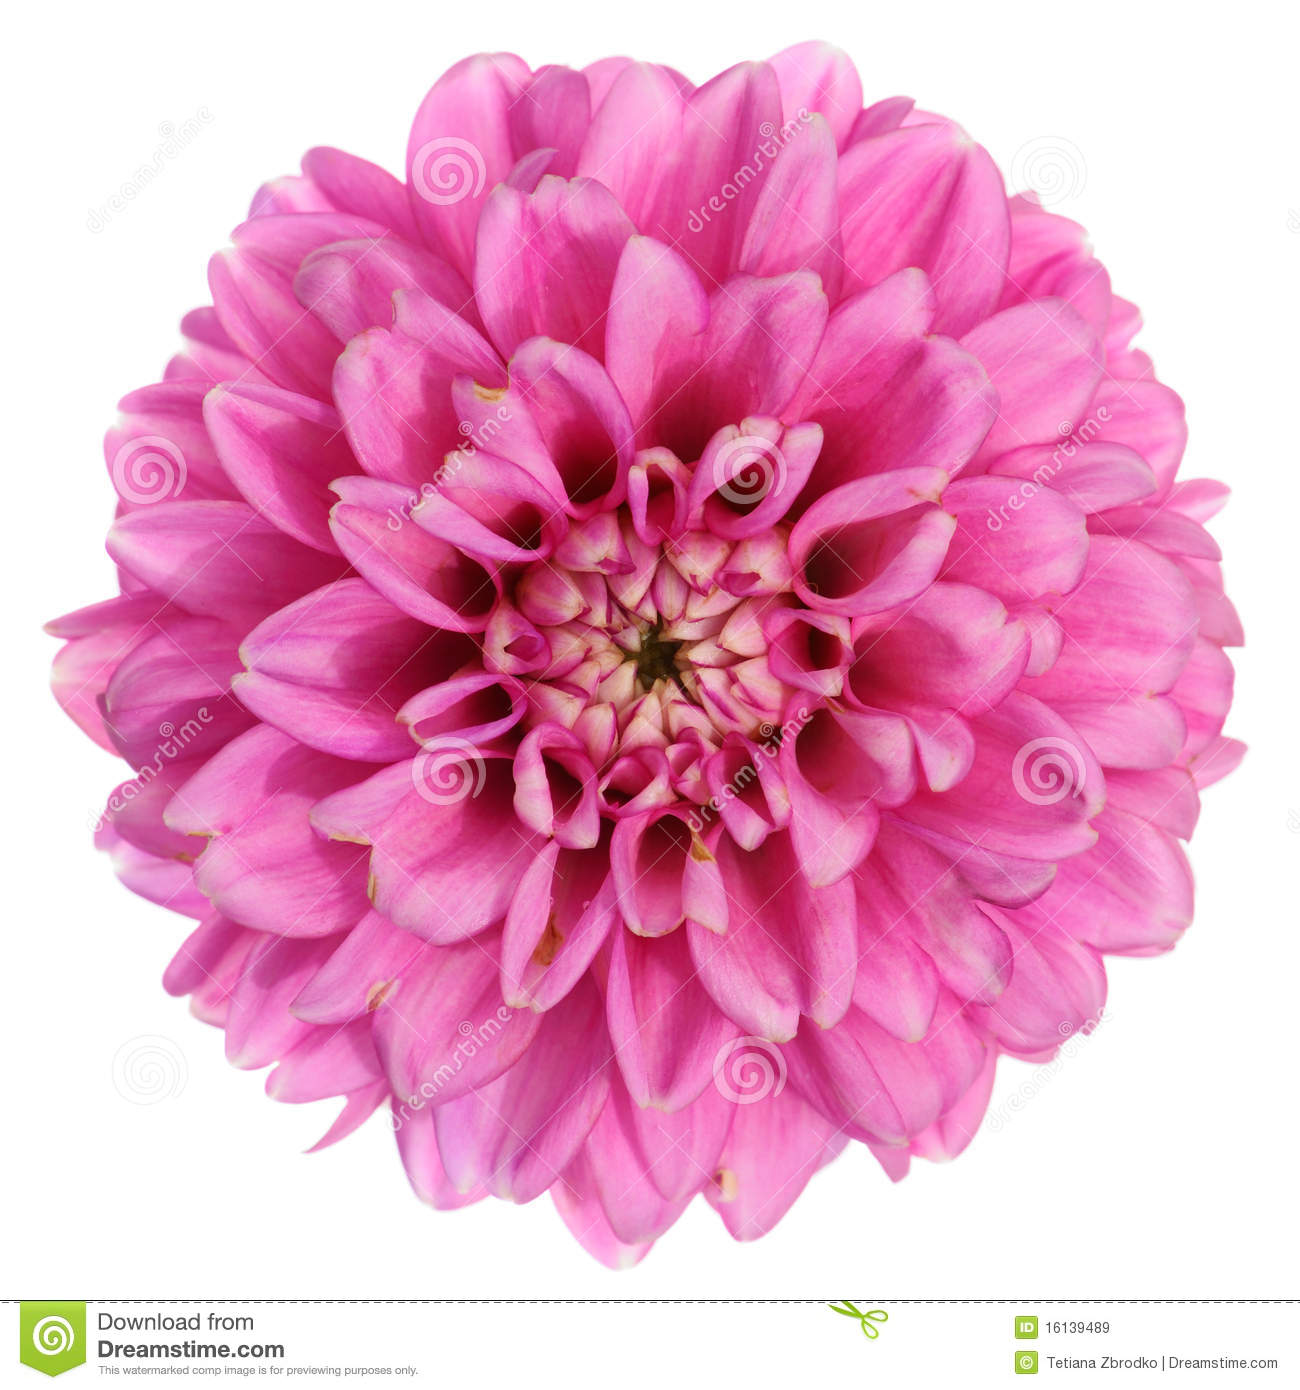 Purple Dahlia Flower Royalty Free Stock Images   Image  16139489